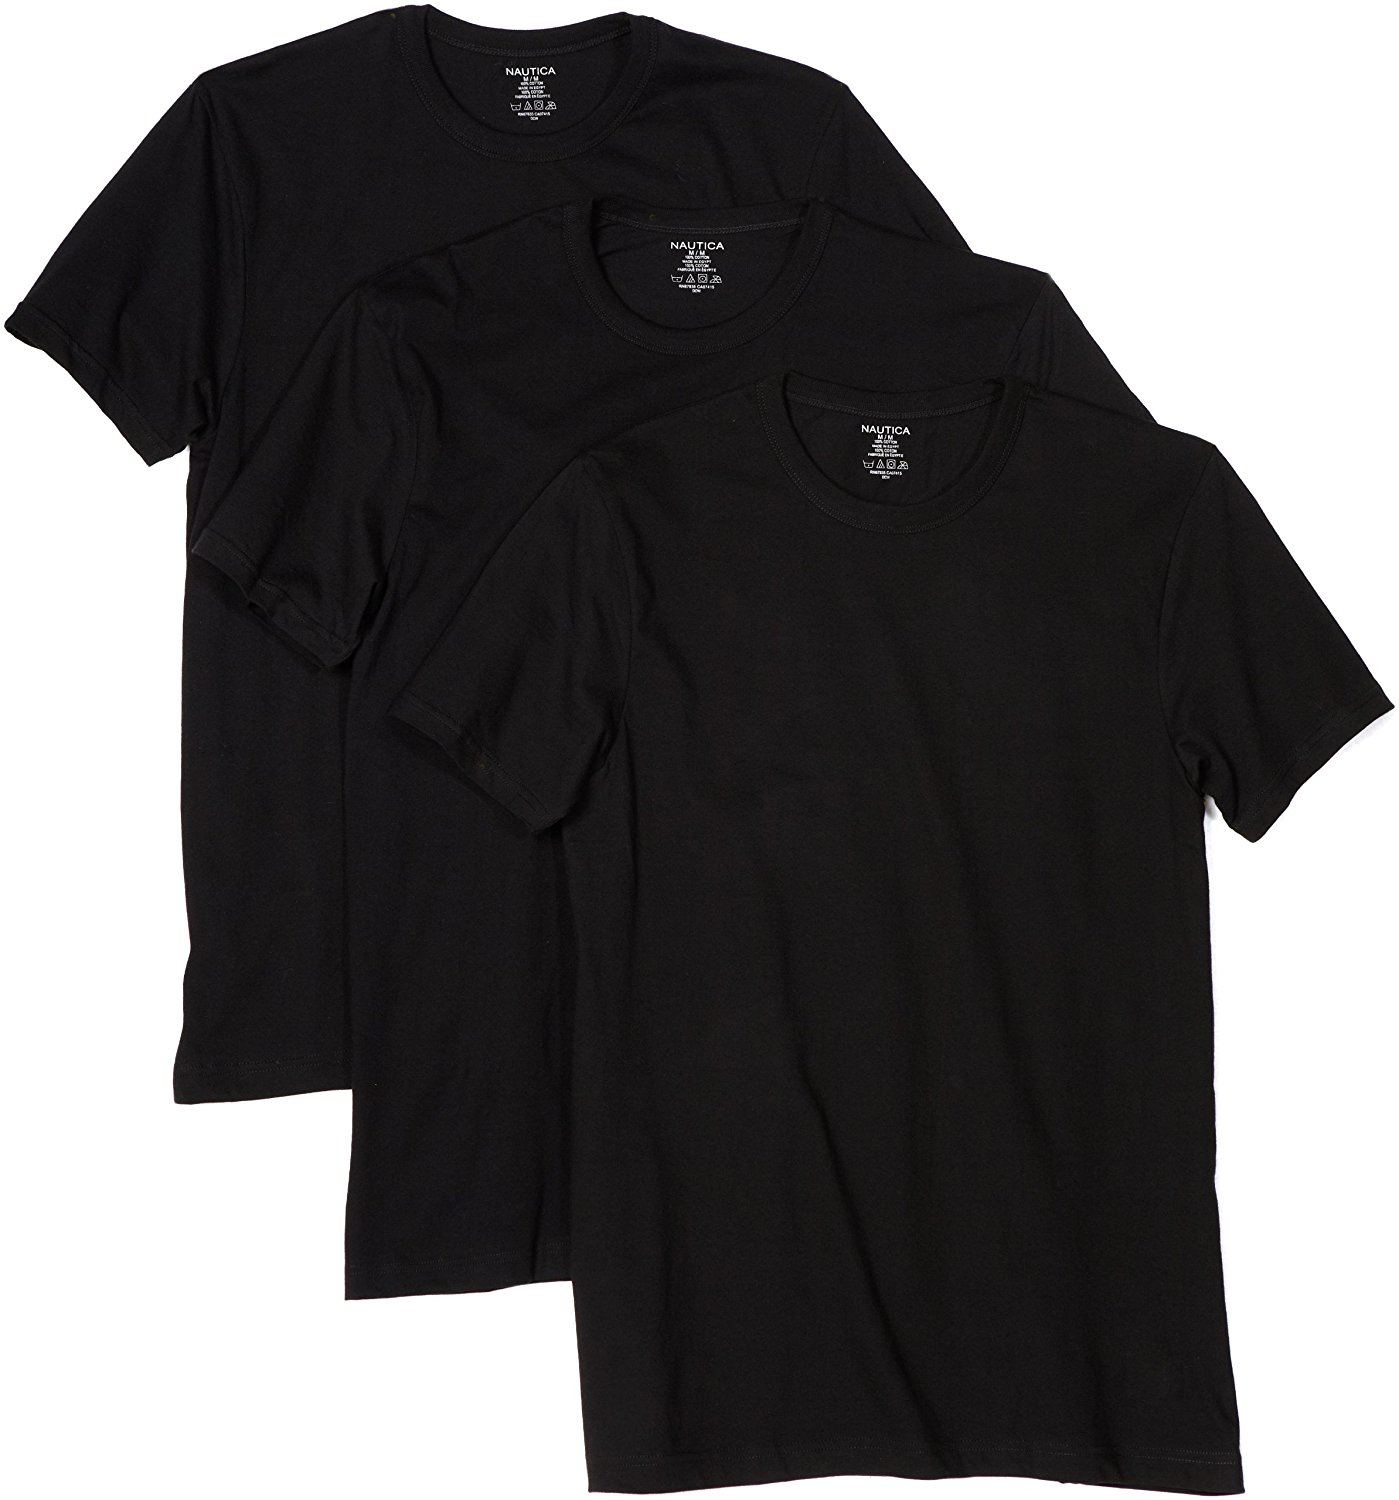 Amazon.com: Nautica Men's Nautica 3 Pack Crew Neck T-Shirt: Clothing ...